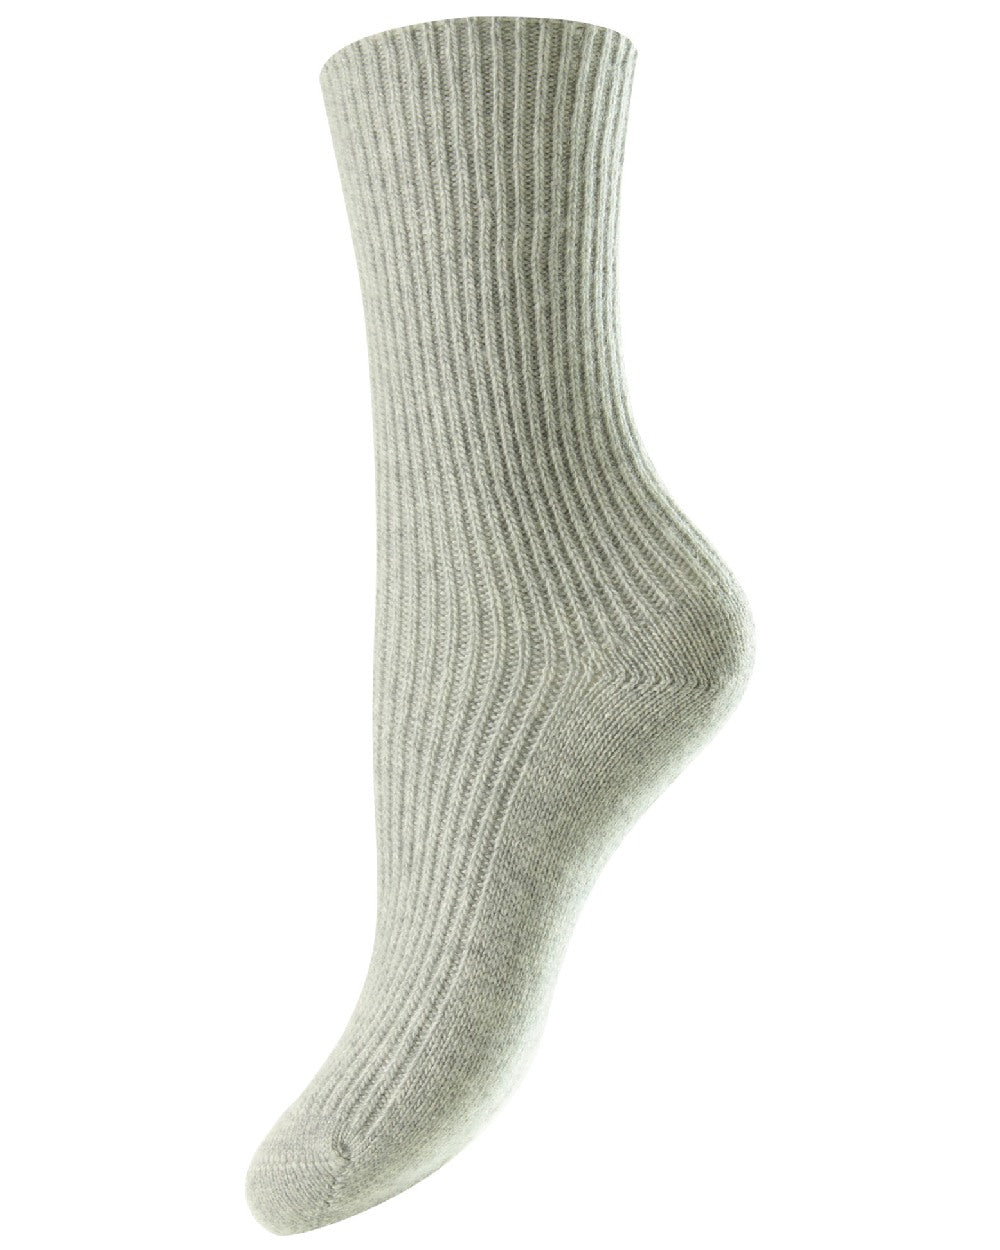 HJ Hall Cashmere Blend Turn Over Top Socks in Soft Grey 